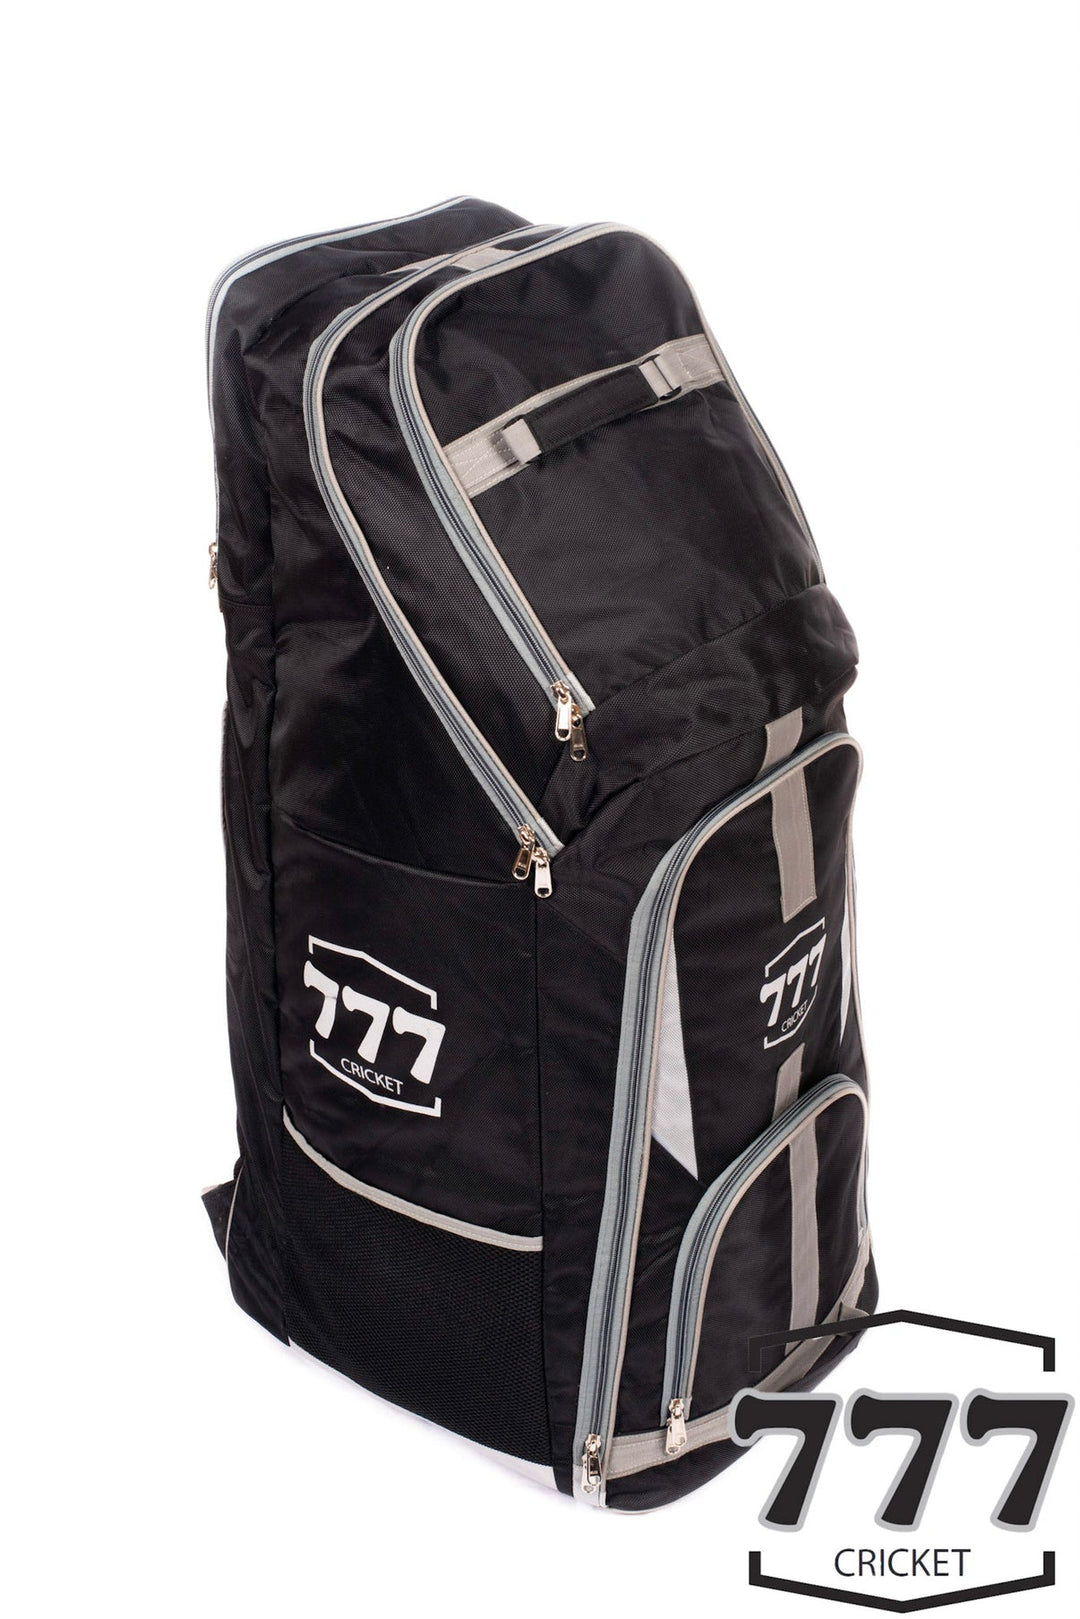 777 Cricket XL Duffle Bag